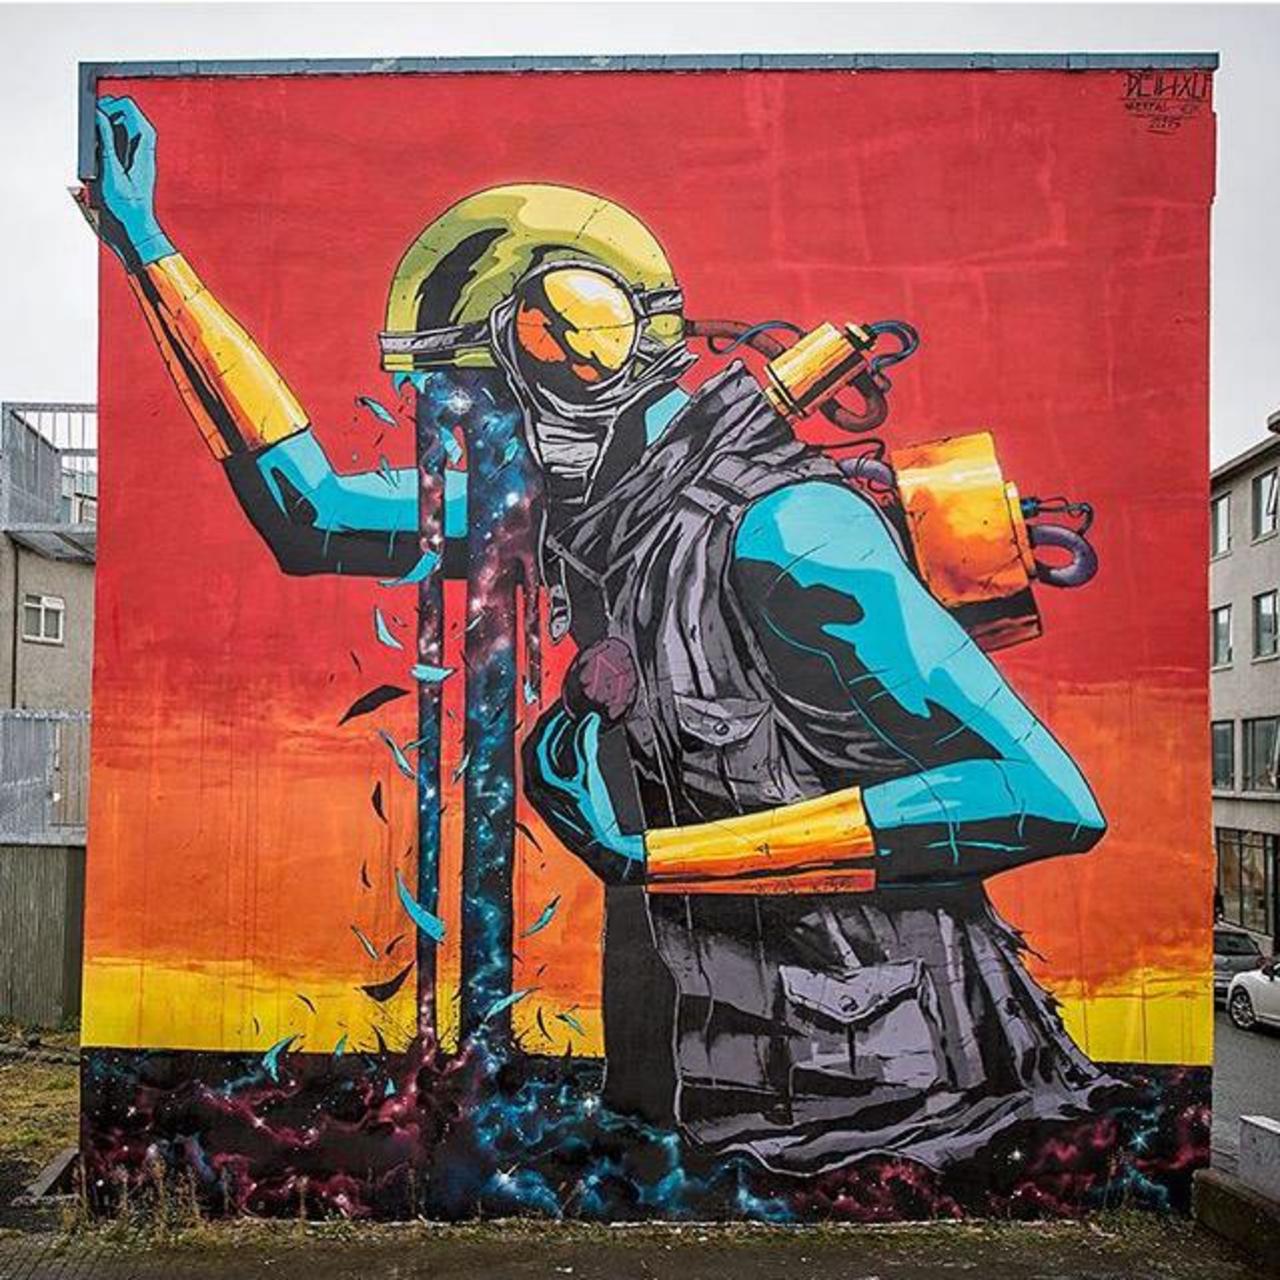 Street Art by Deih in Reykjavik 

#art #graffiti #mural #streetart https://t.co/FuDS40qc0T